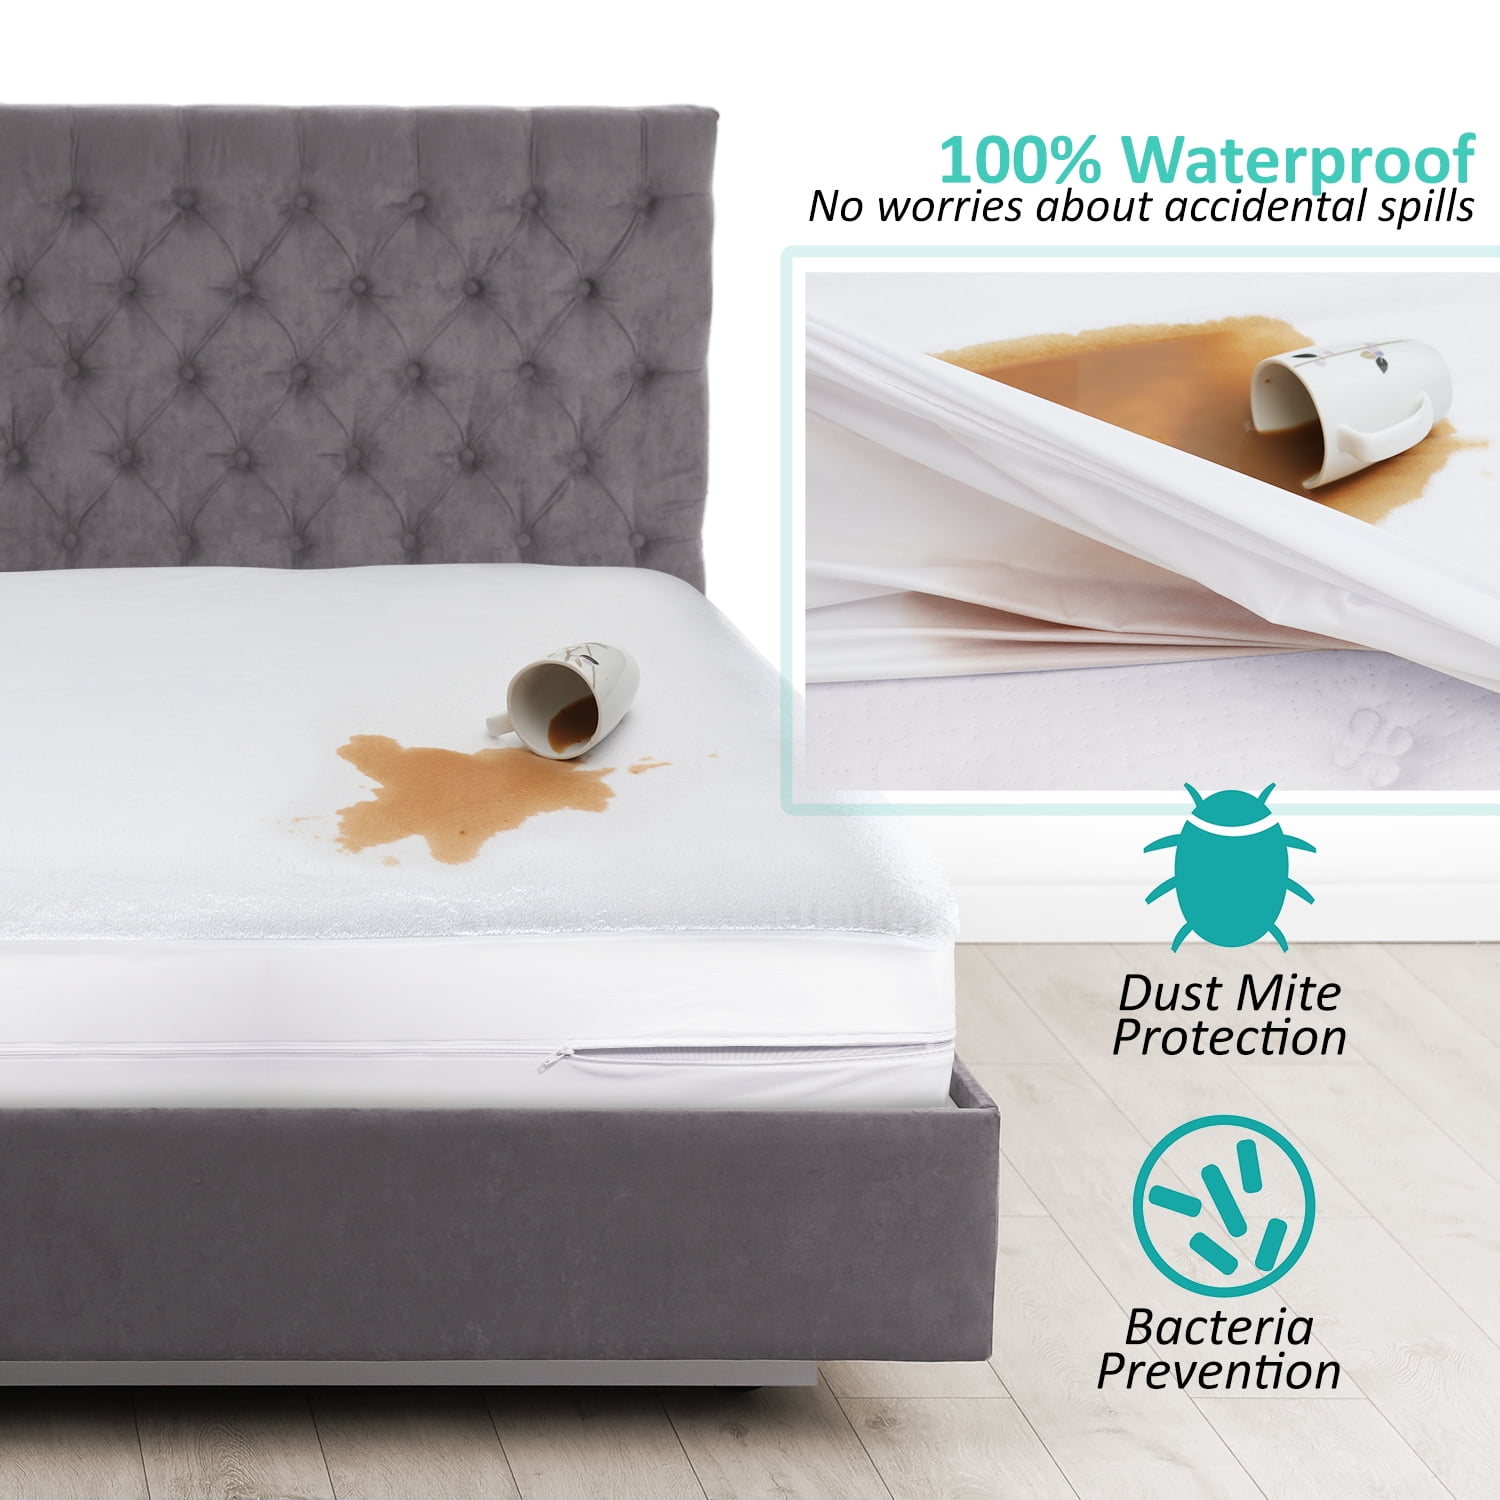 Deep Pocket Mattress Protector Zippered Encasement Bed Bug Water Proof Cover New 